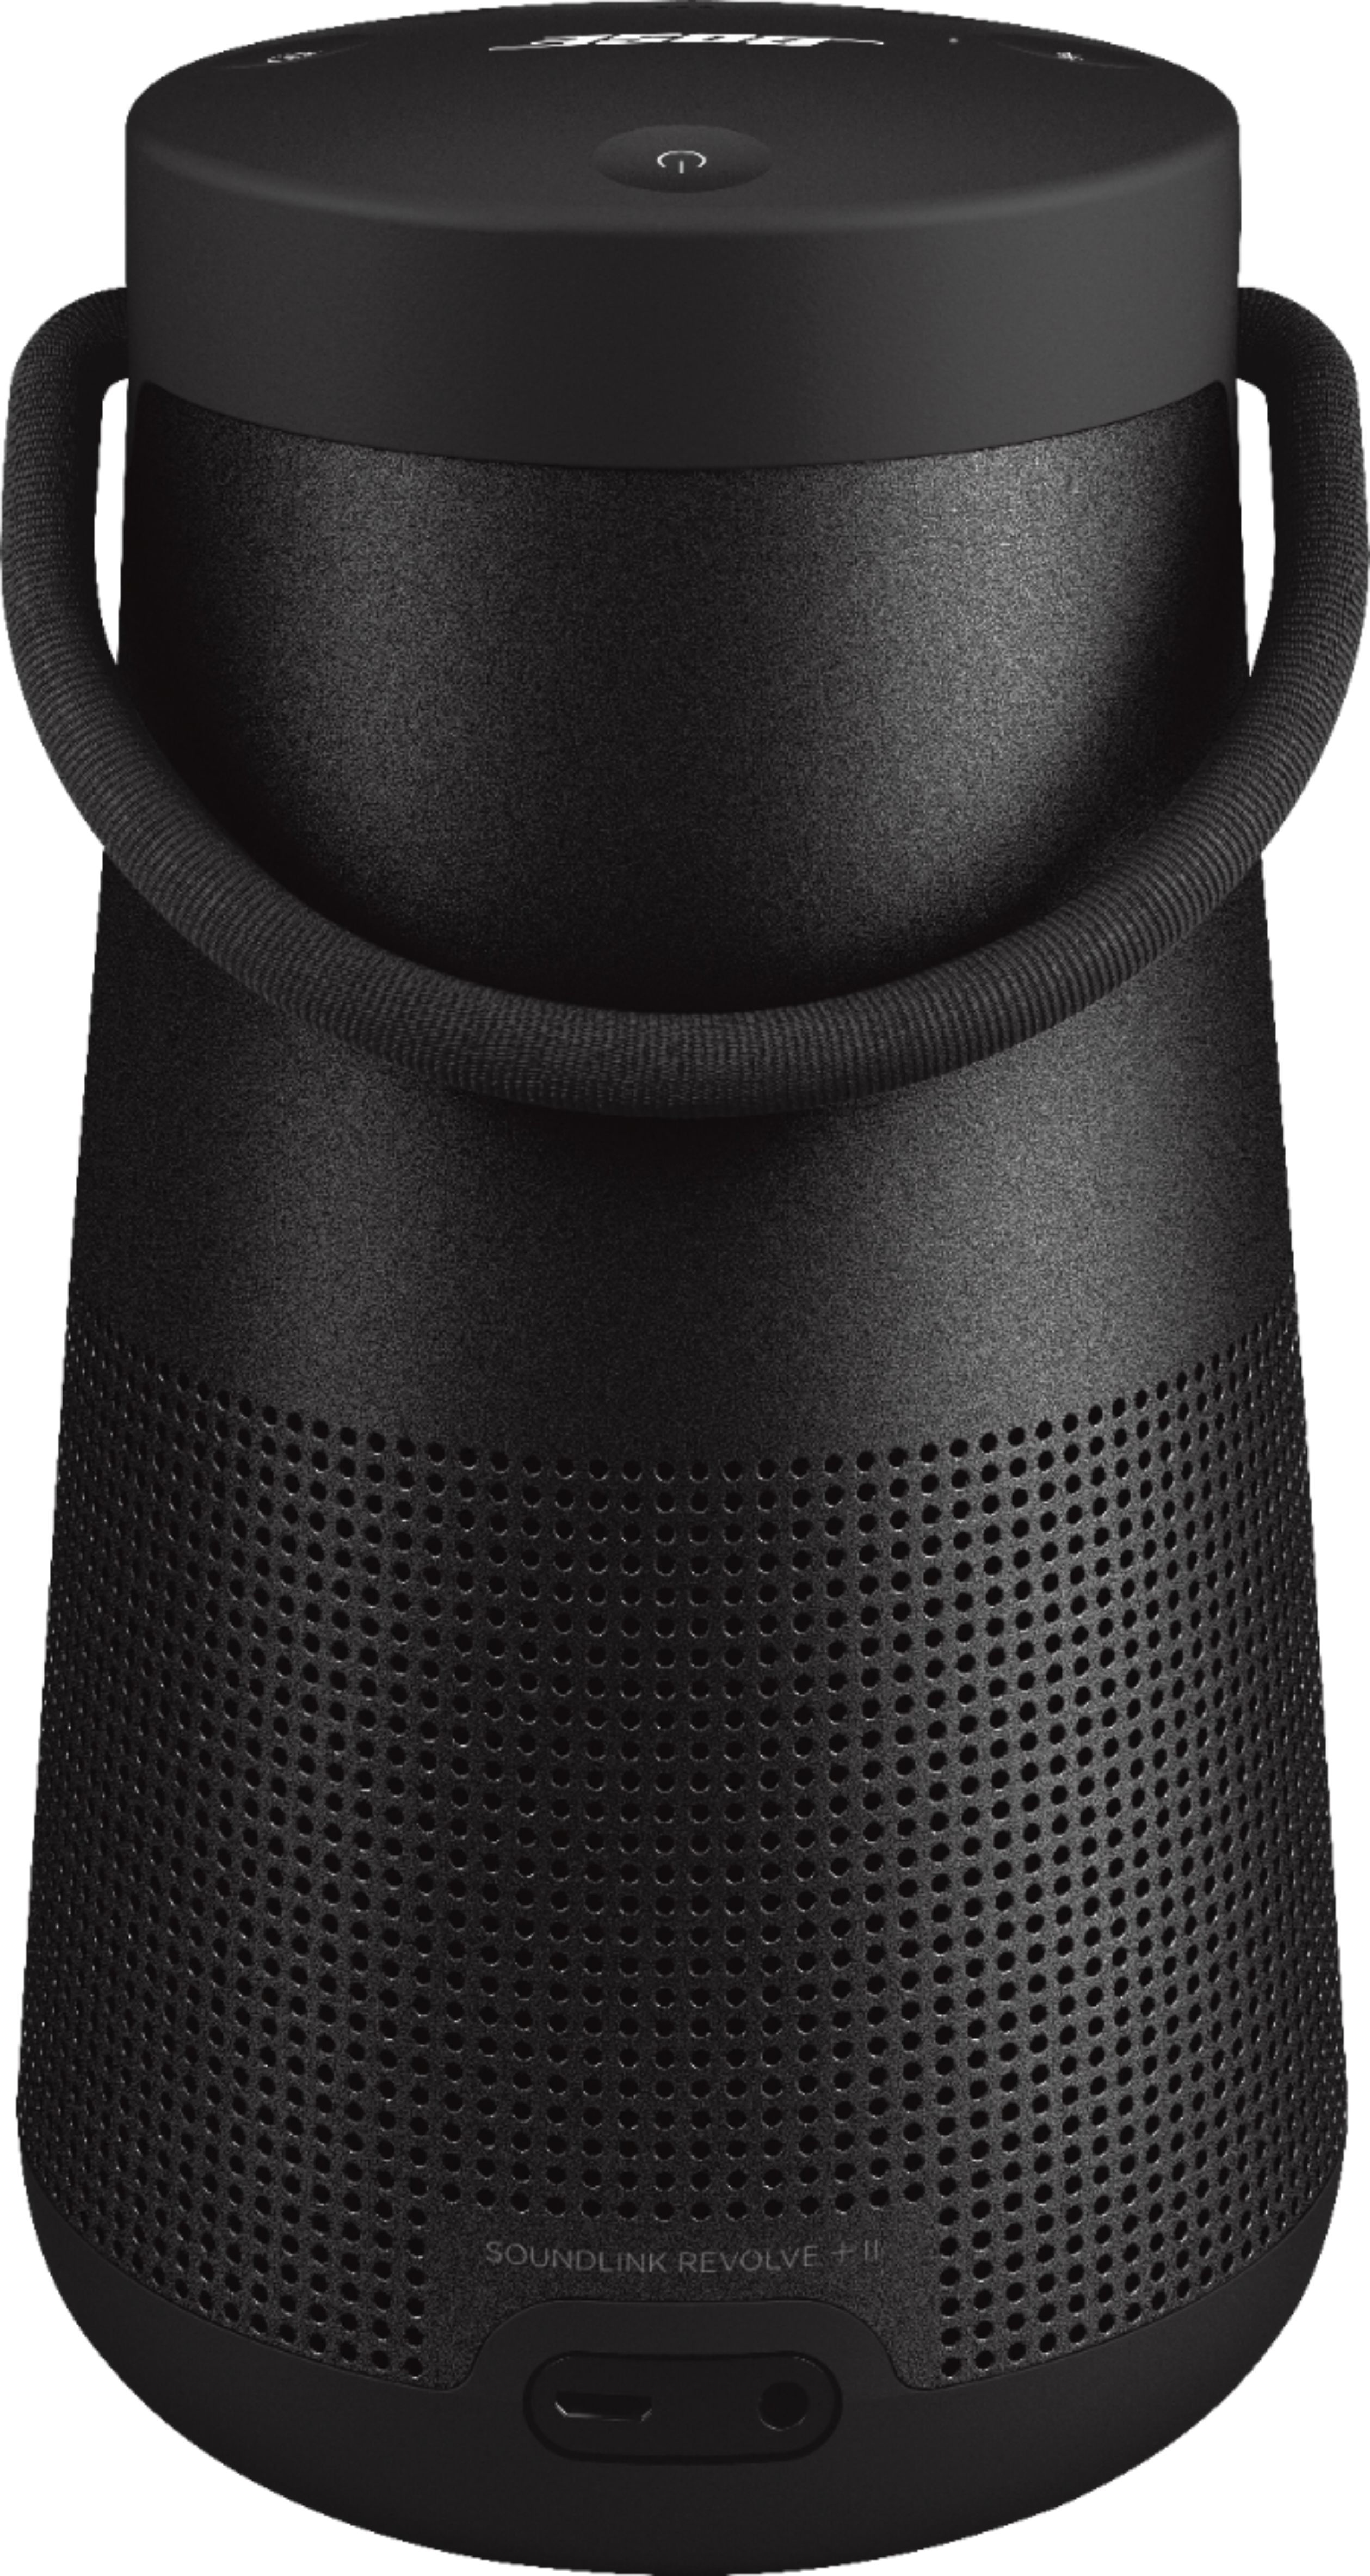 Bose SoundLink Revolve+ II Portable Bluetooth Speaker Triple Black